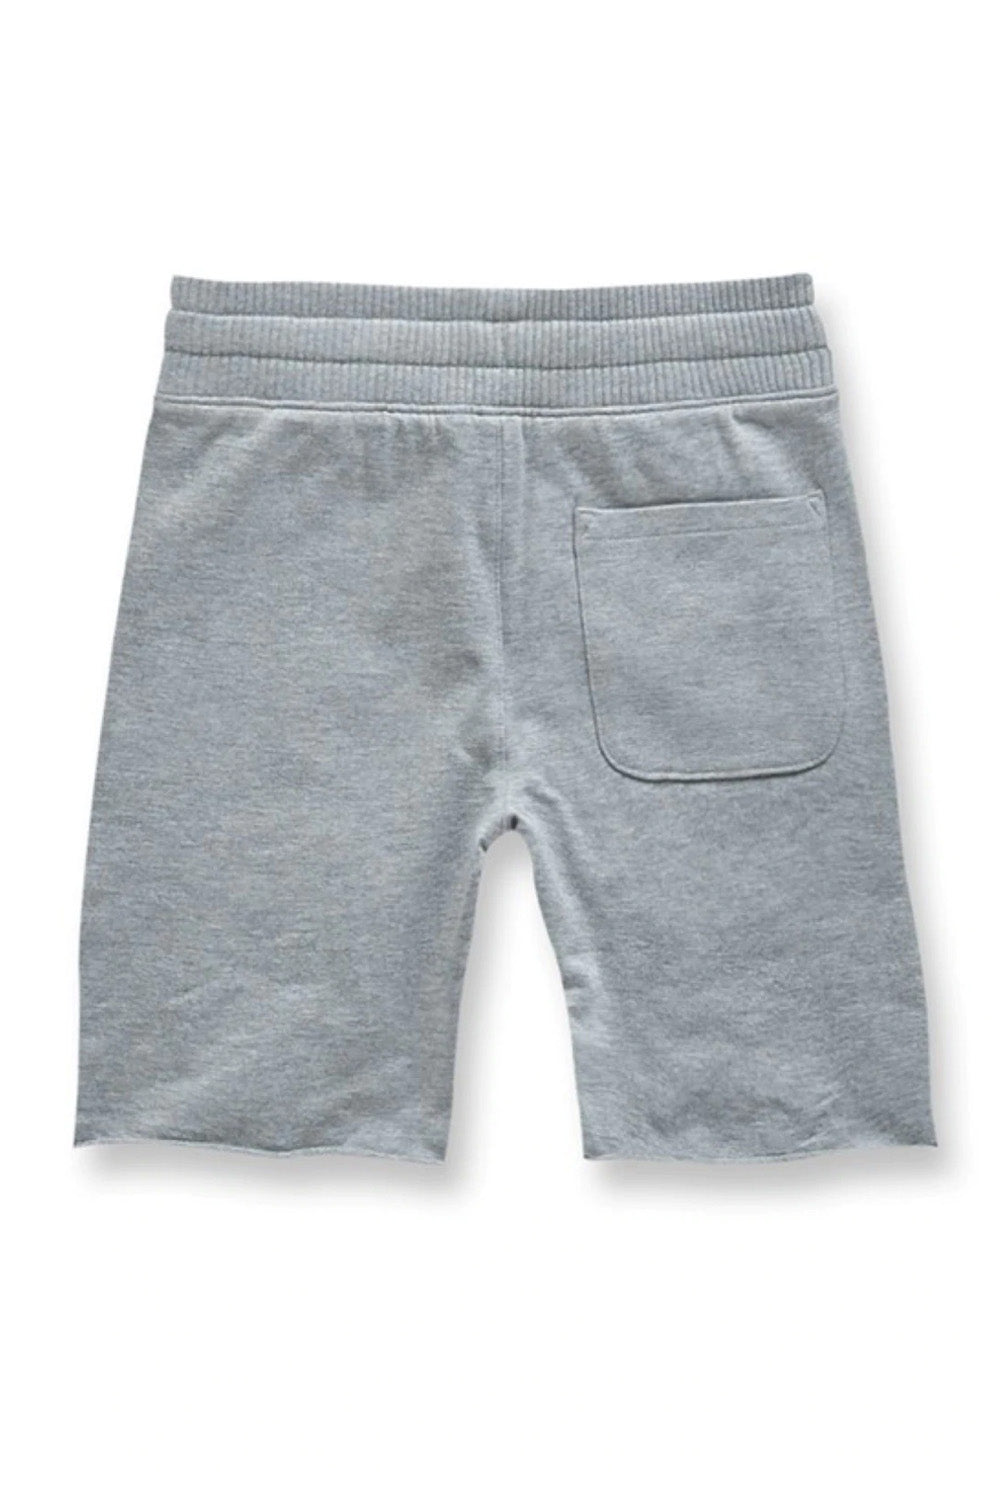 The backside of the Boy’s Fleece Shorts with Ribbings | Jordan Craig Heather Grey